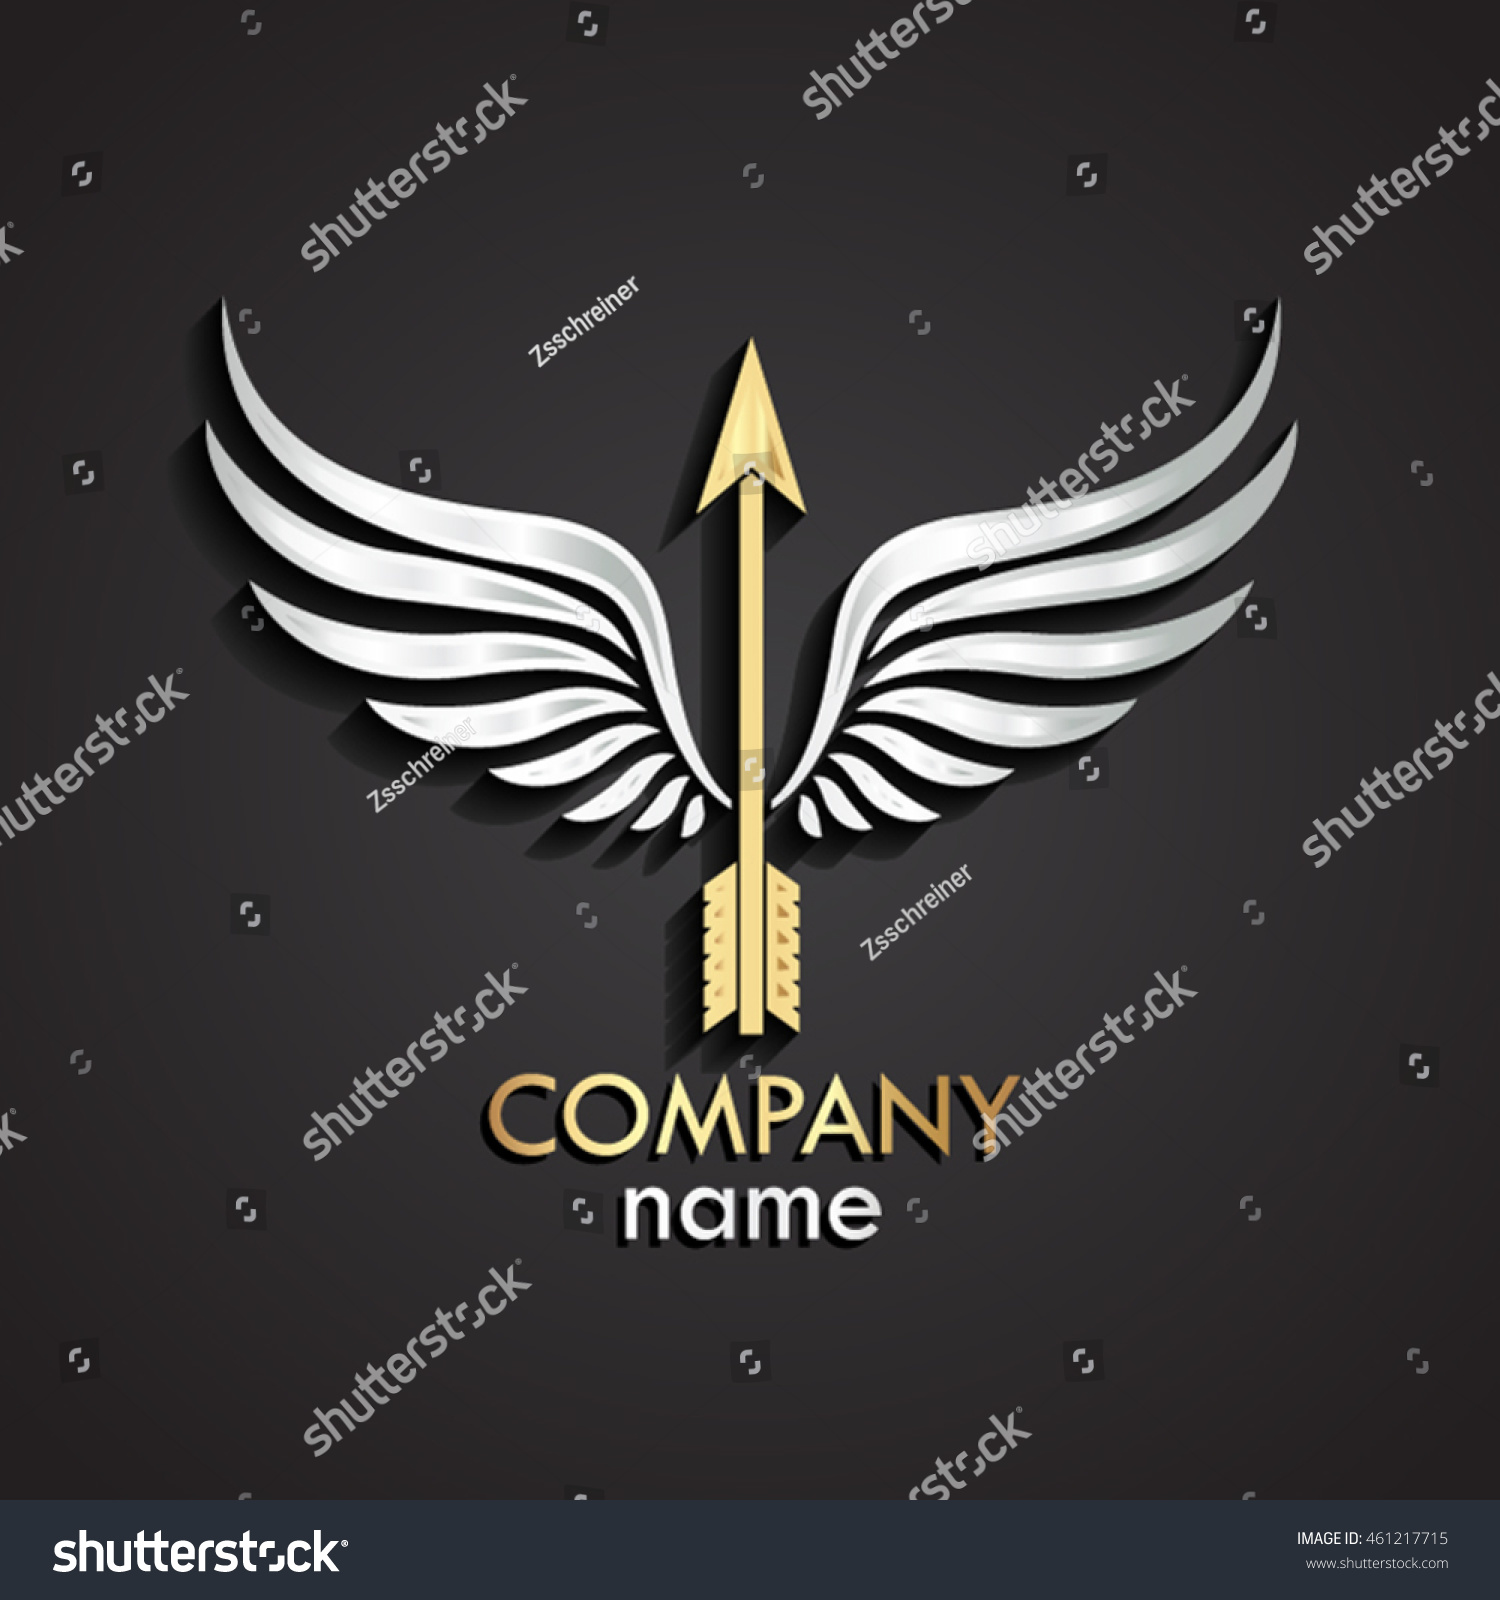 Download 3d Gold Arrow Silver Wings Logo Stock Vector 461217715 ...